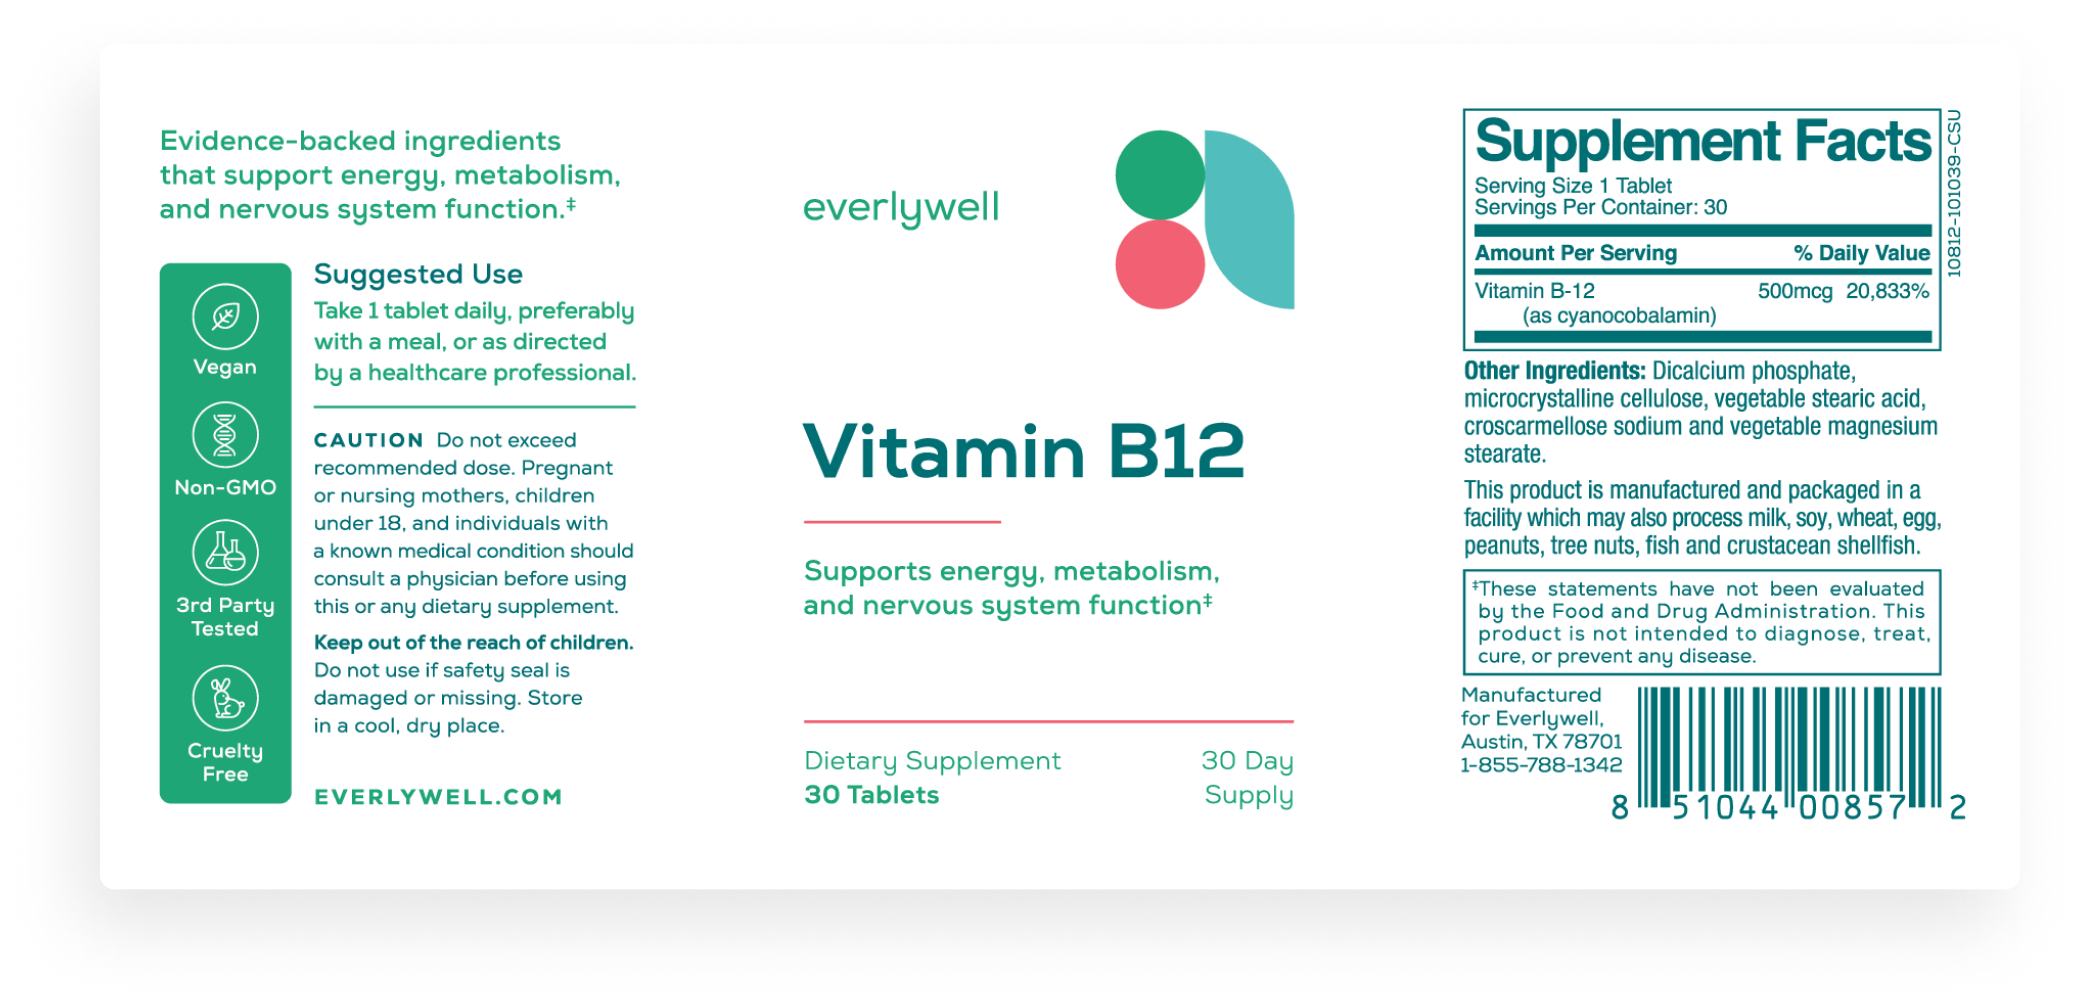 Supplement Label for Vitamin B12 Tablets